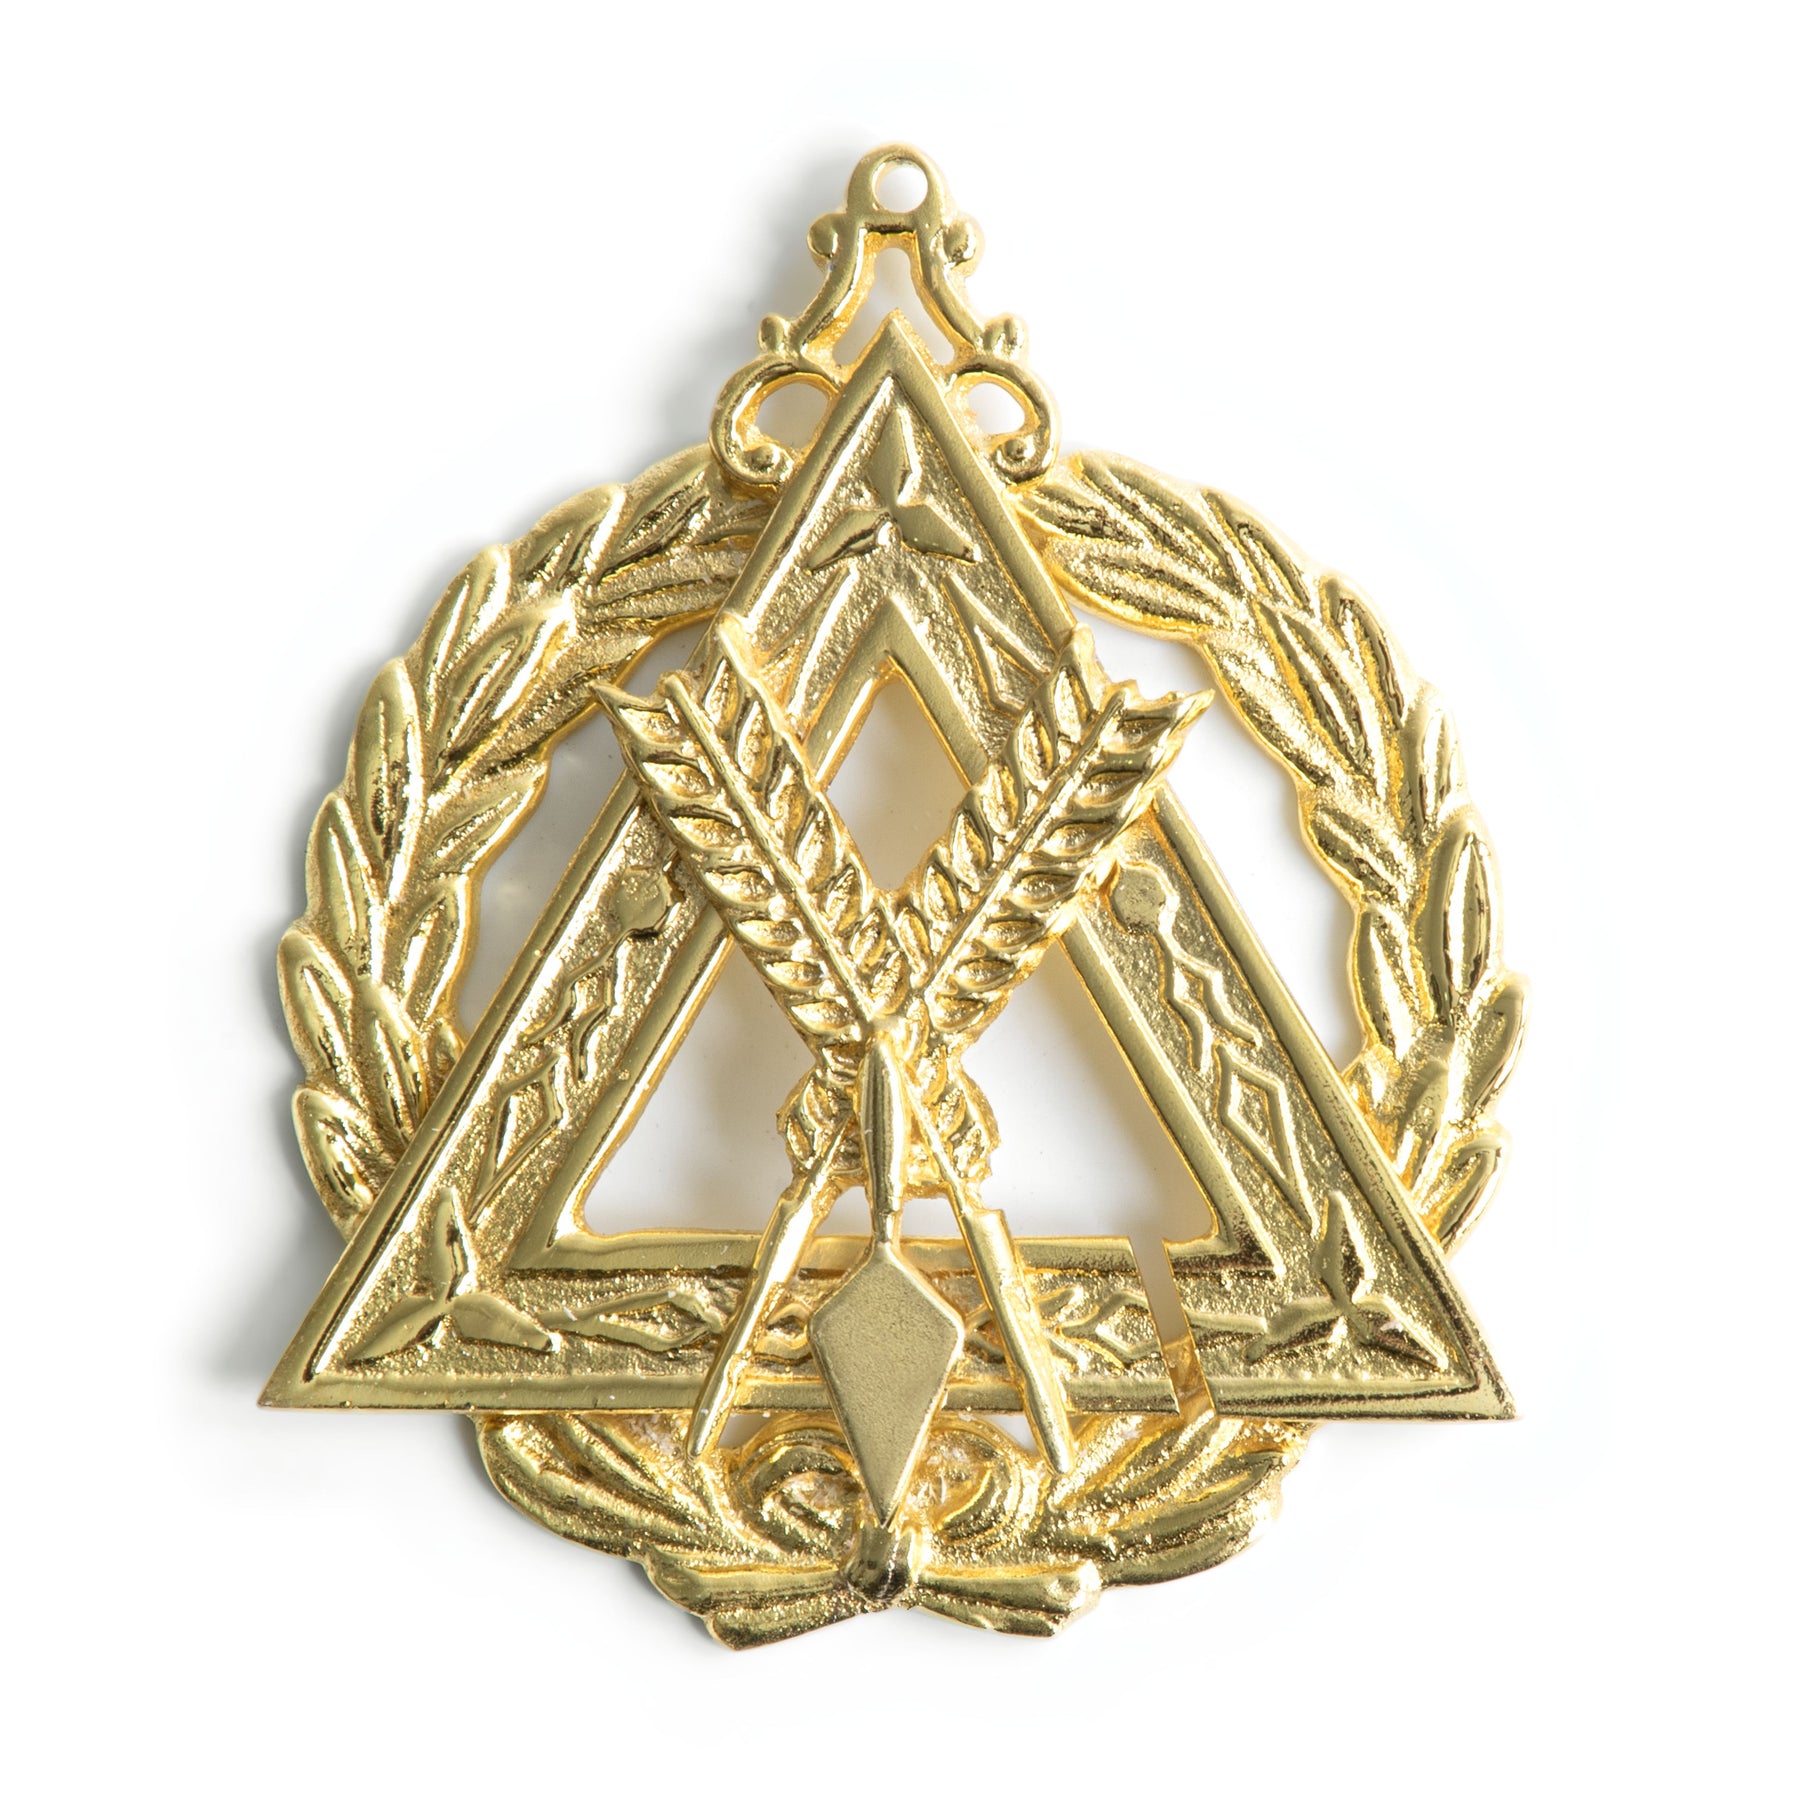 Grand Recorder Royal & Select Masters Officer Collar Jewel - Gold Plated - Bricks Masons